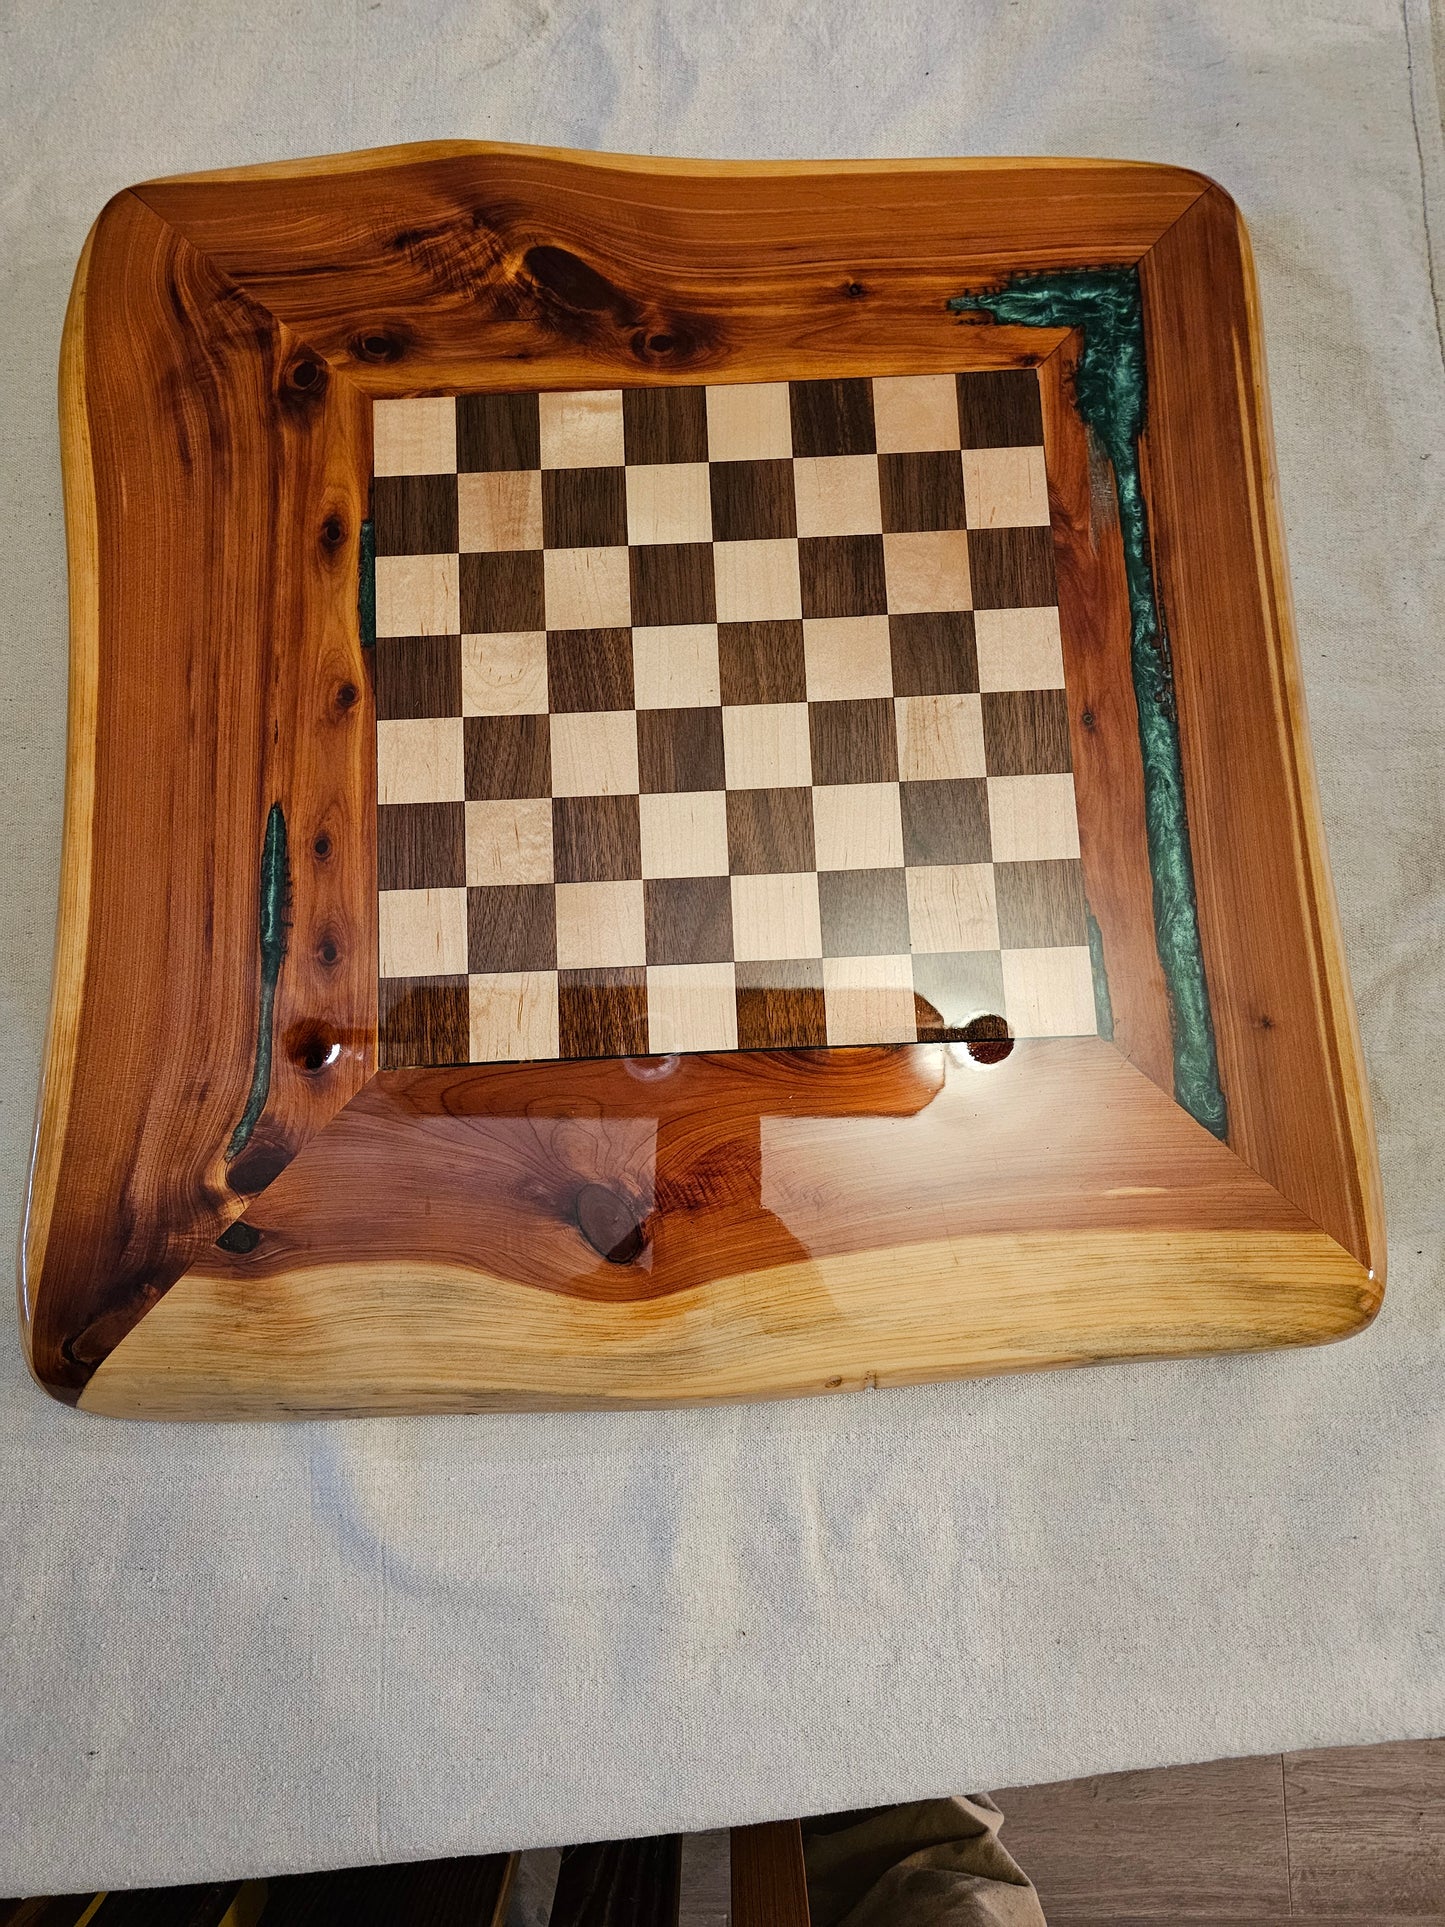 Cedar Epoxy Chess Board